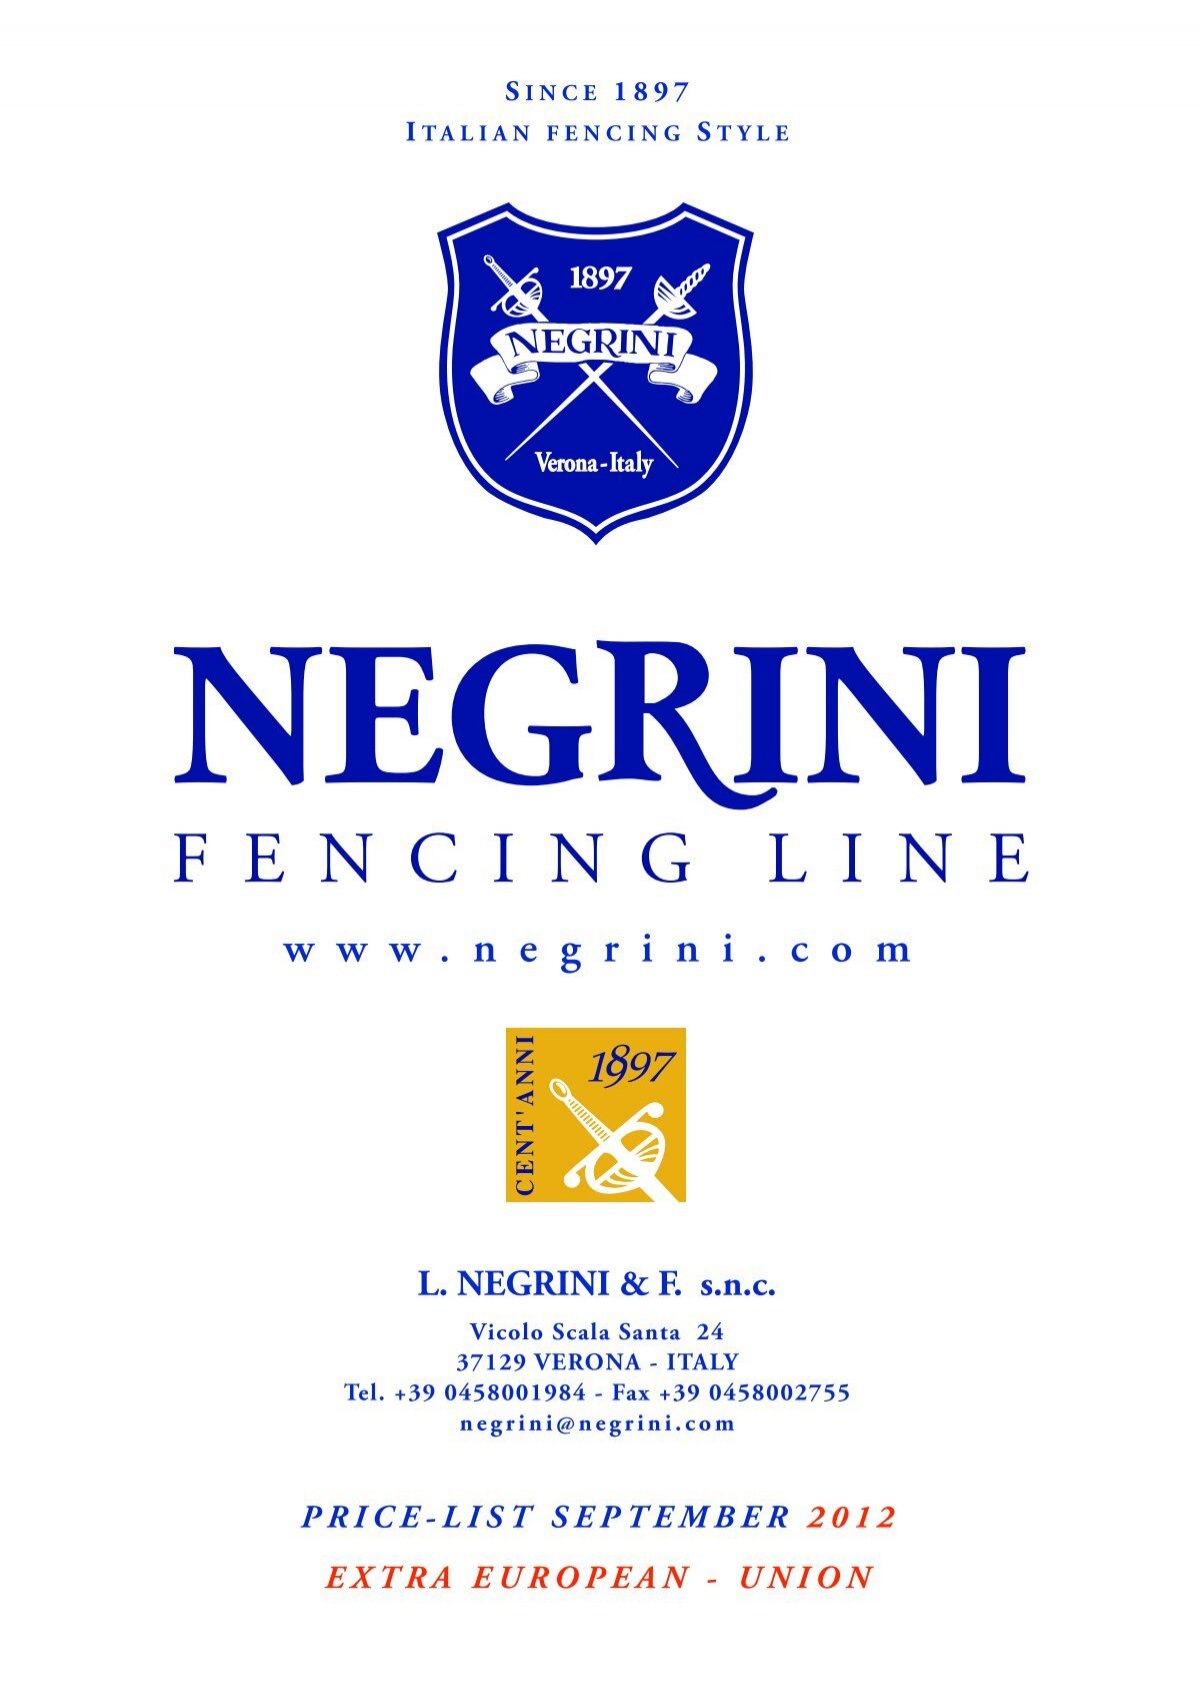 Extra European Union - Negrini Fencing Line